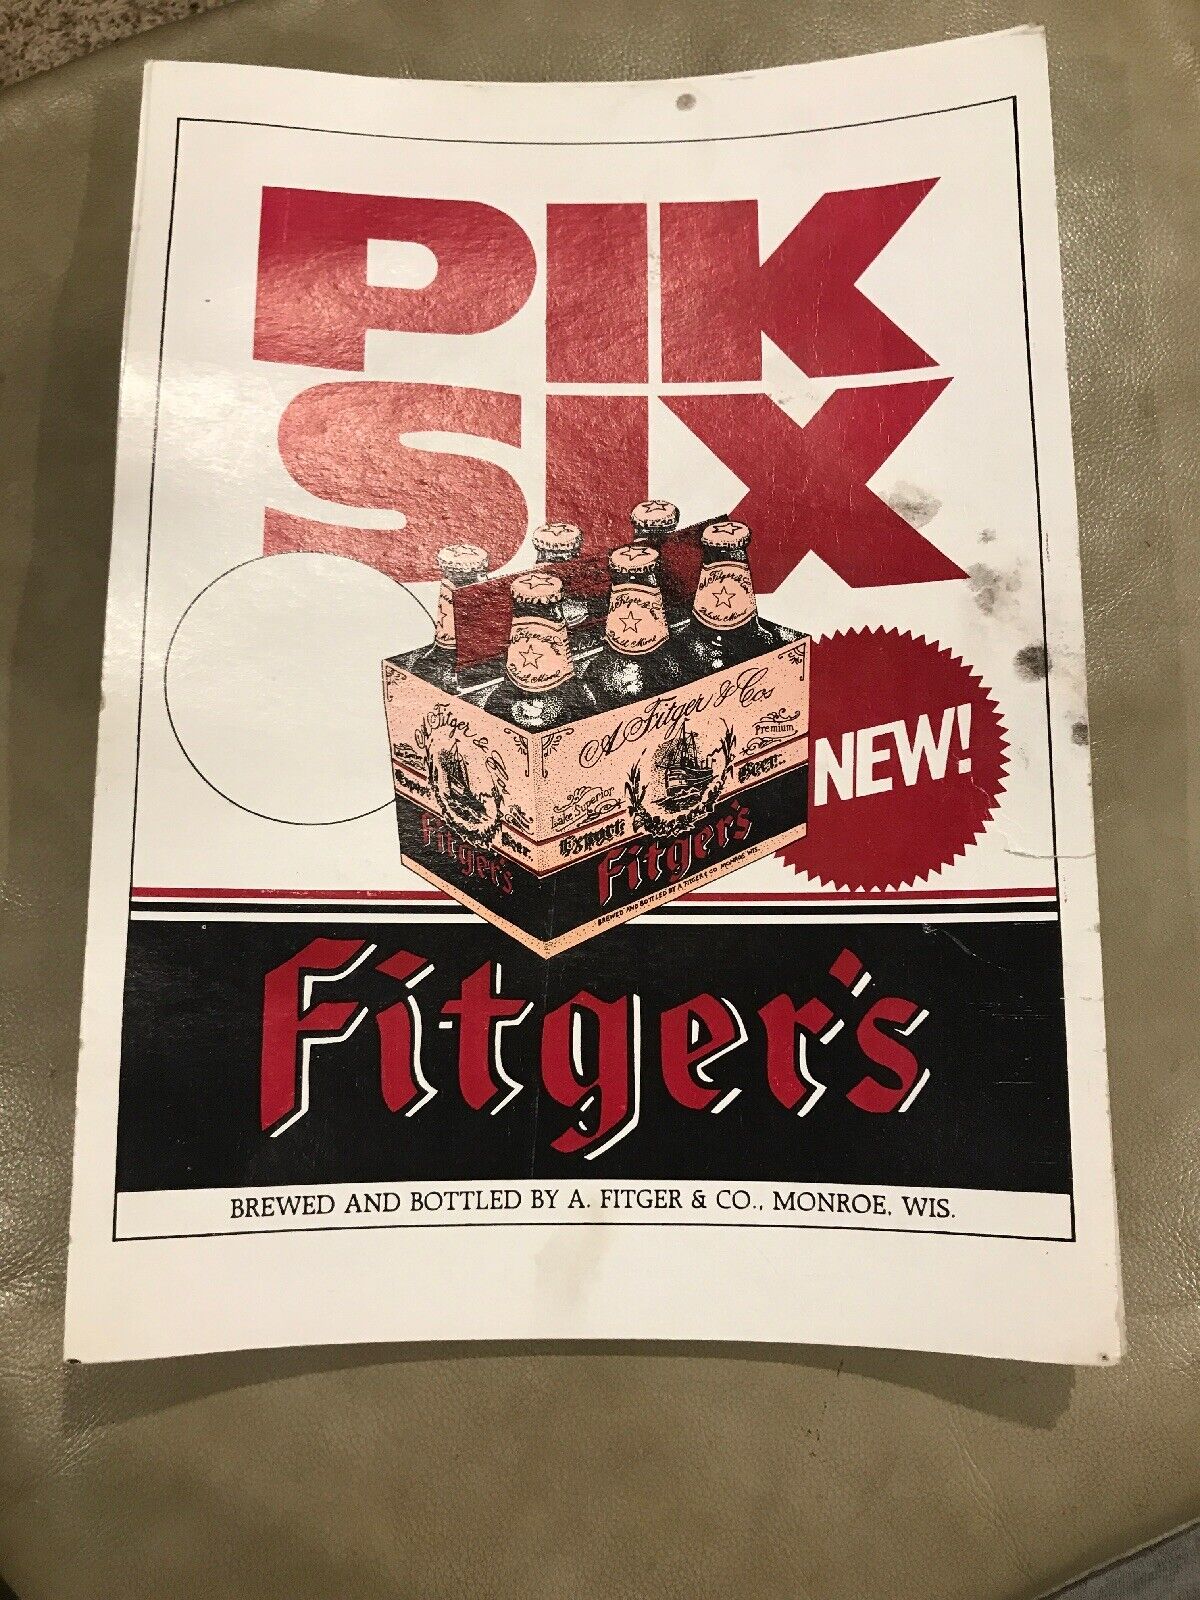 Vintage Cardboard Fitger’s Beer Pik Six Advertising Display (Condition May Vary)